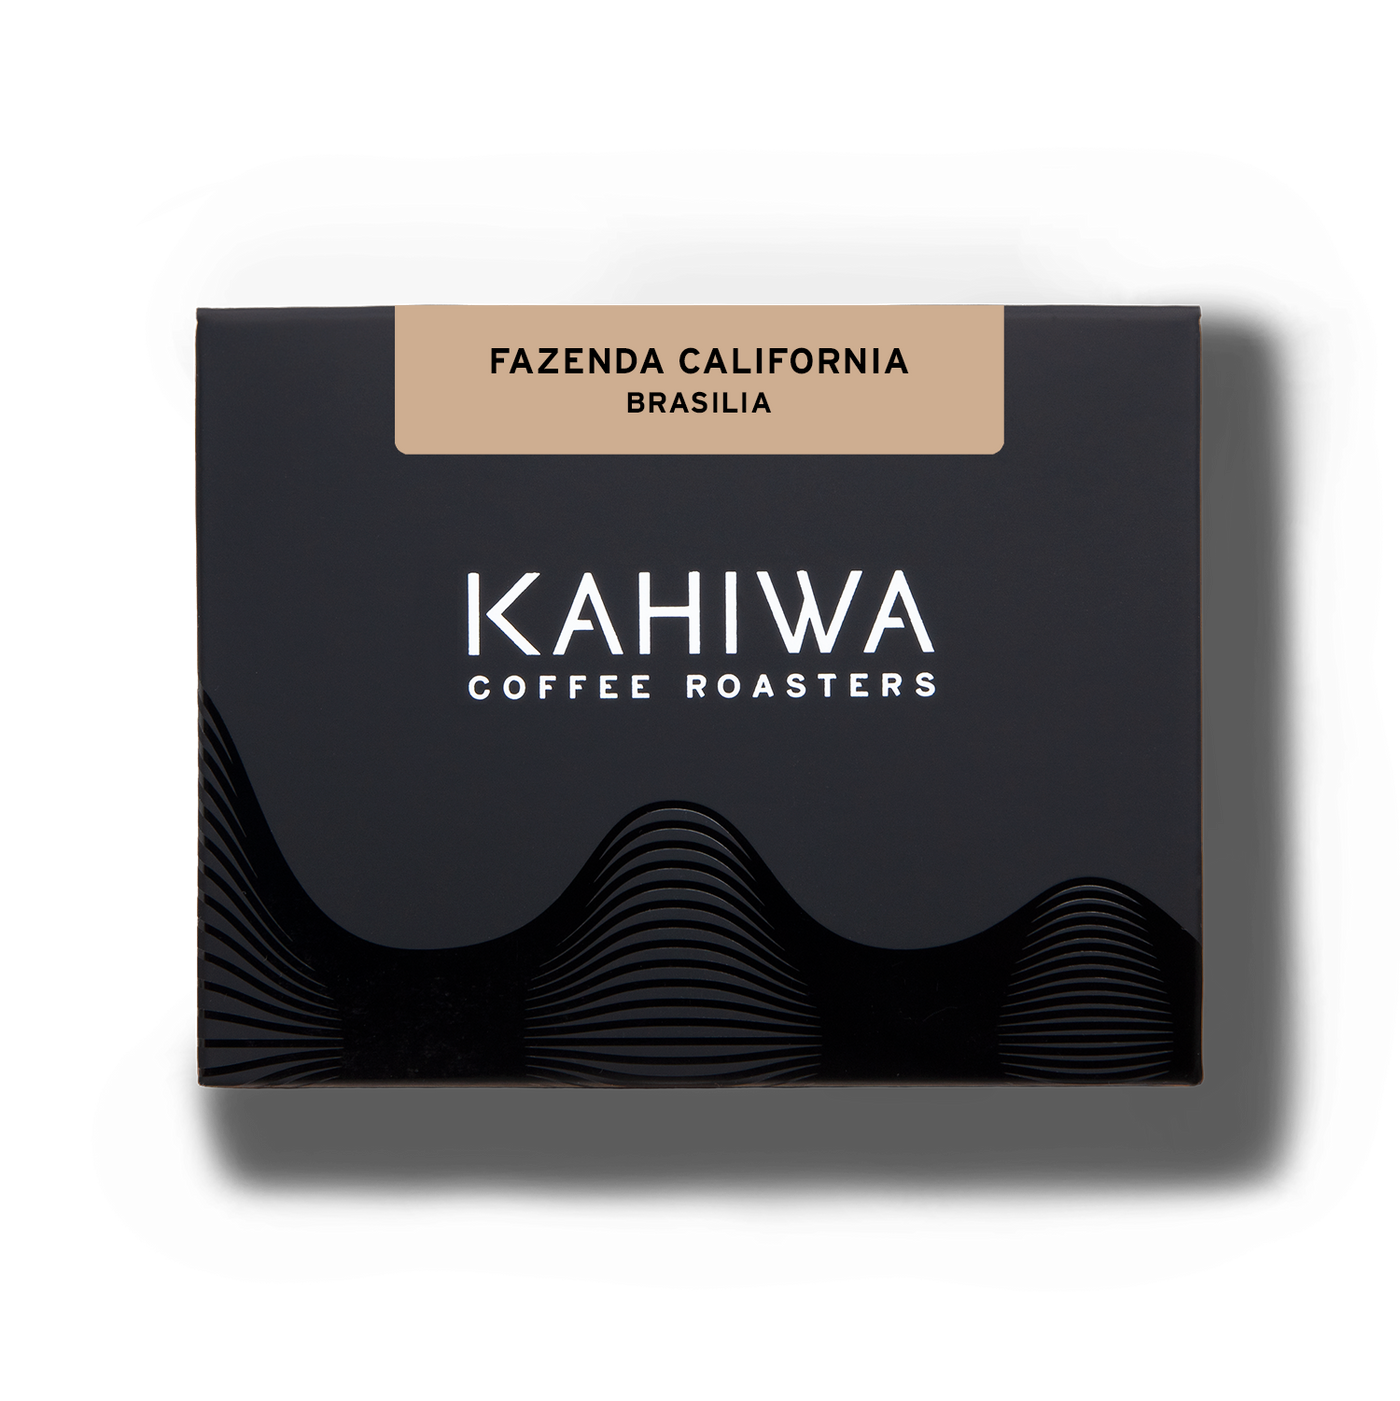 FAZENDA CALIFORNIA - Kahiwa Coffee Roasters